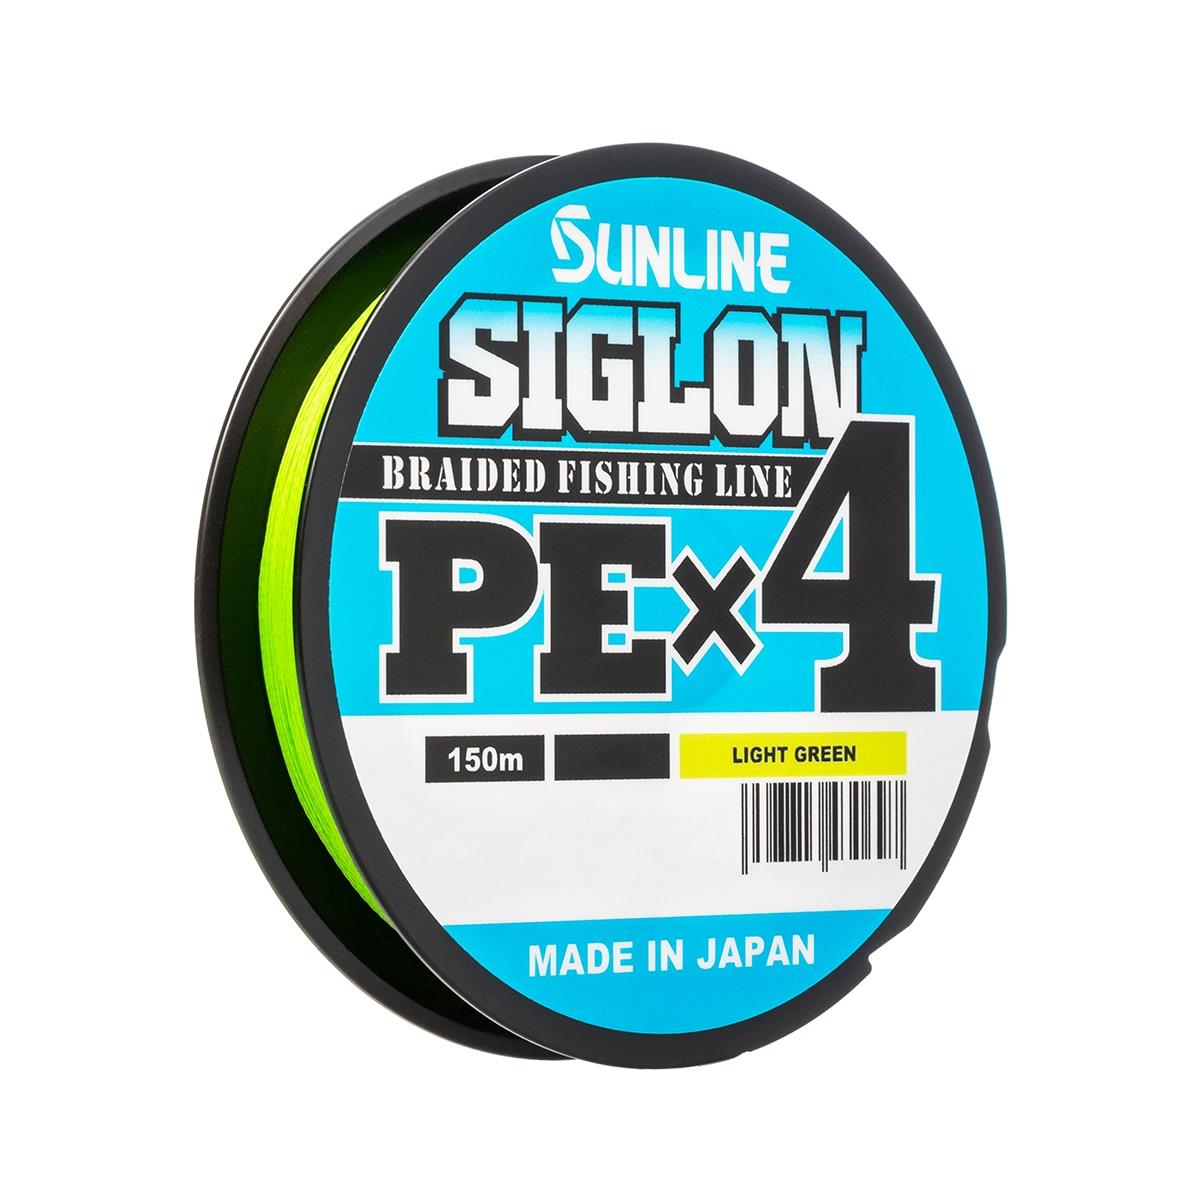 Шнур SIGLON PE×4 150 м (Light green) Sunline шнур